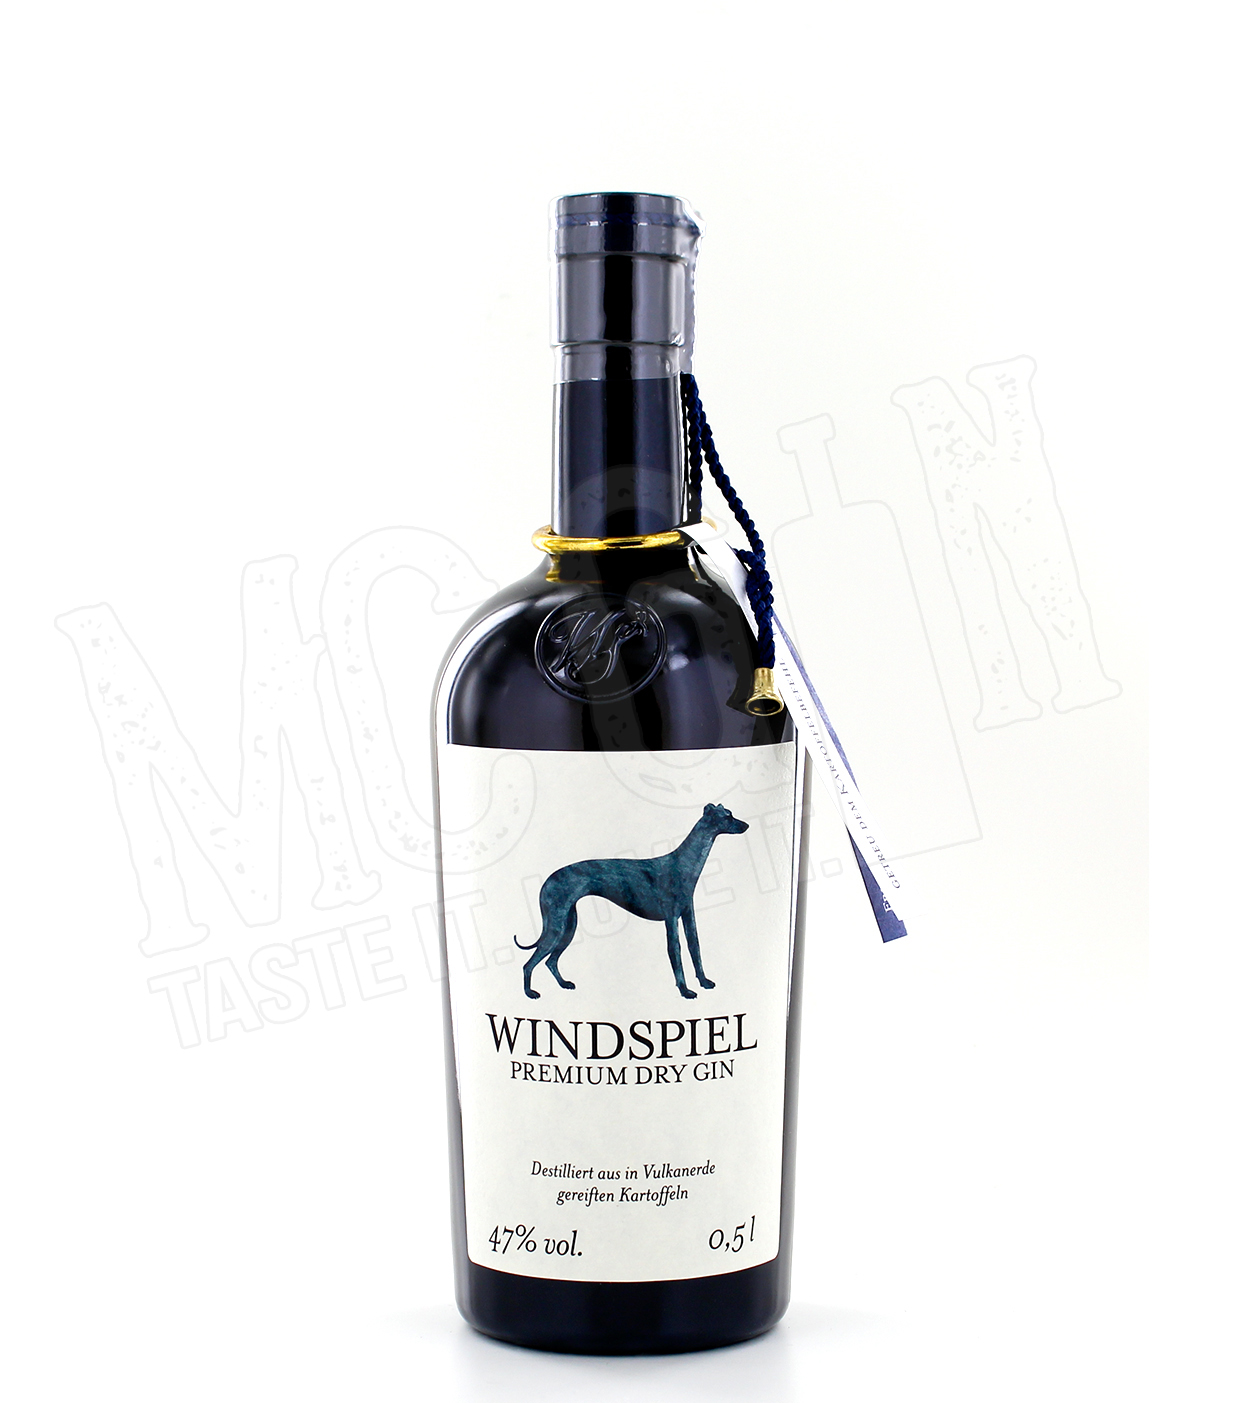 Windspiel Premium Dry Gin - 0.5L | Dry Gin | McGin.ch - Taste it, love it!